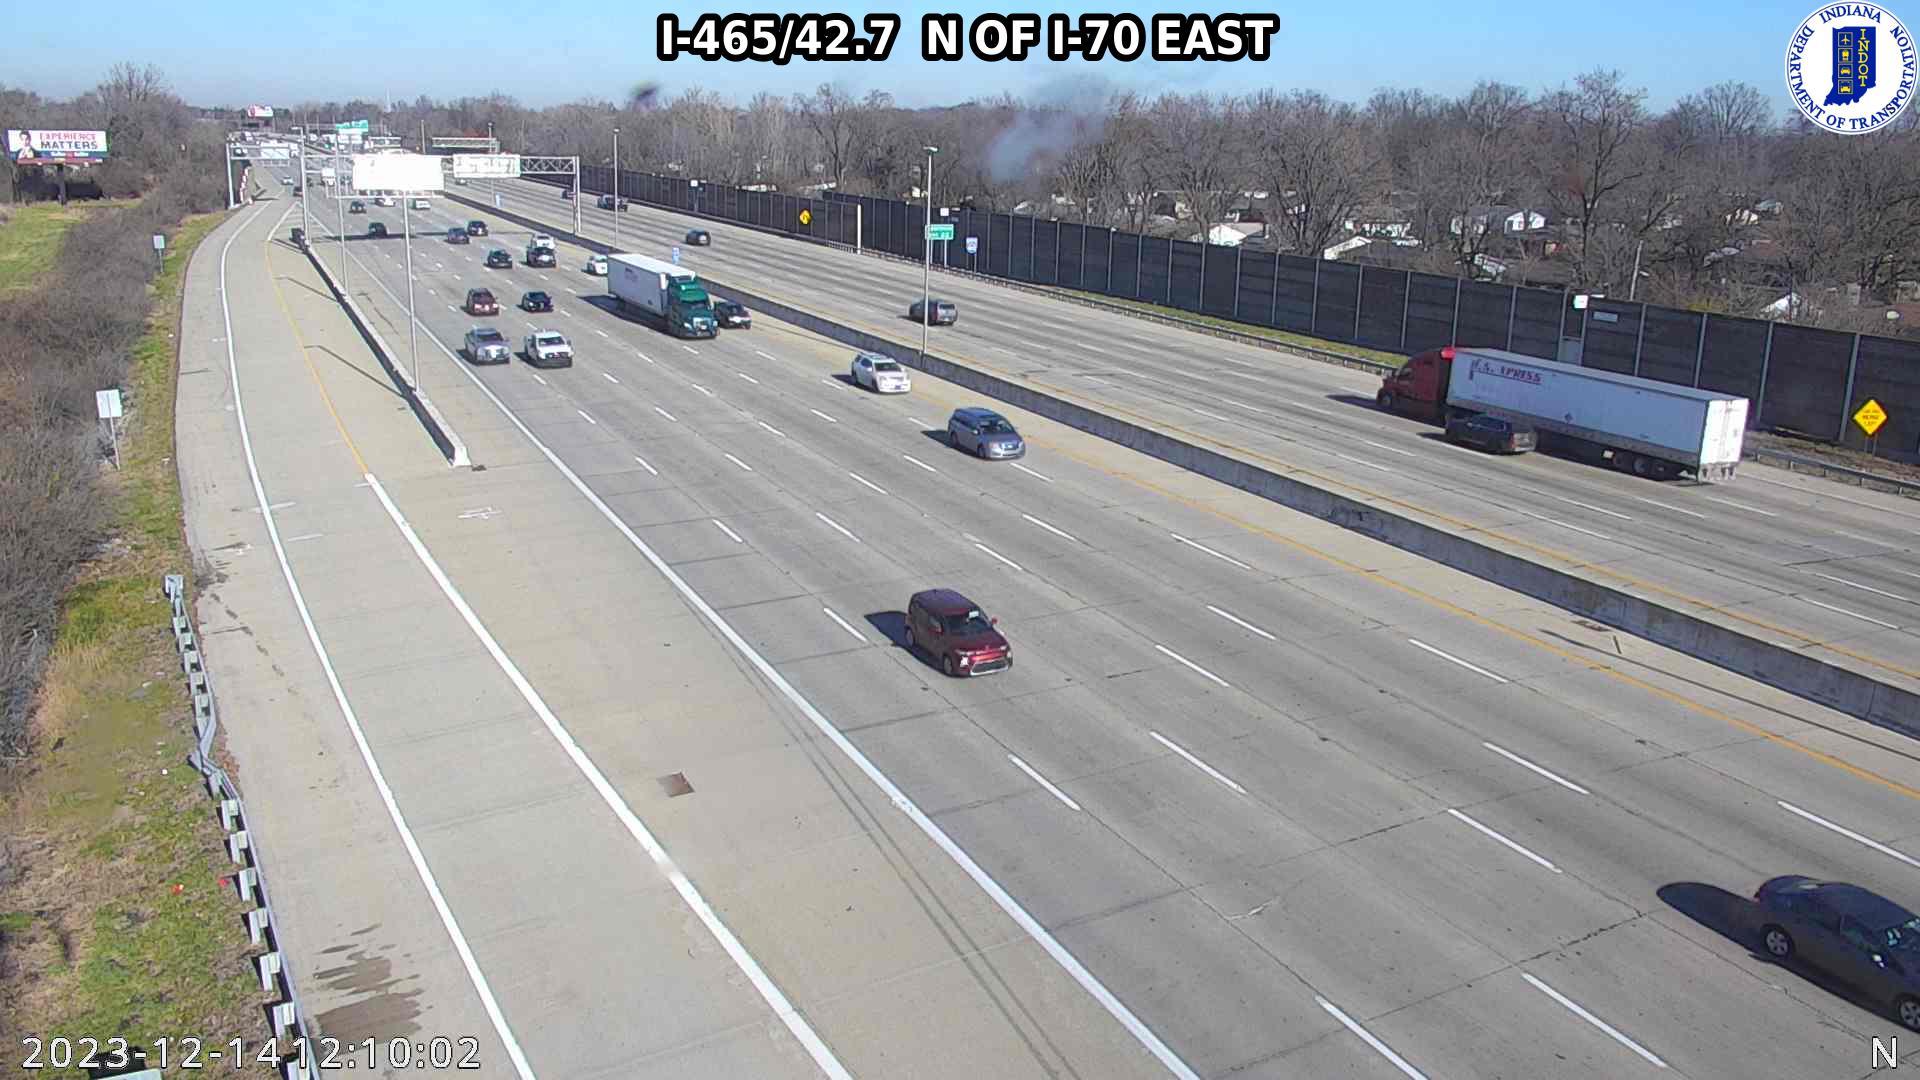 Traffic Cam Indianapolis: I-465: I-465/42.7 N OF I-70 EAST: I-465/42.7 N OF I-70 EAST Player